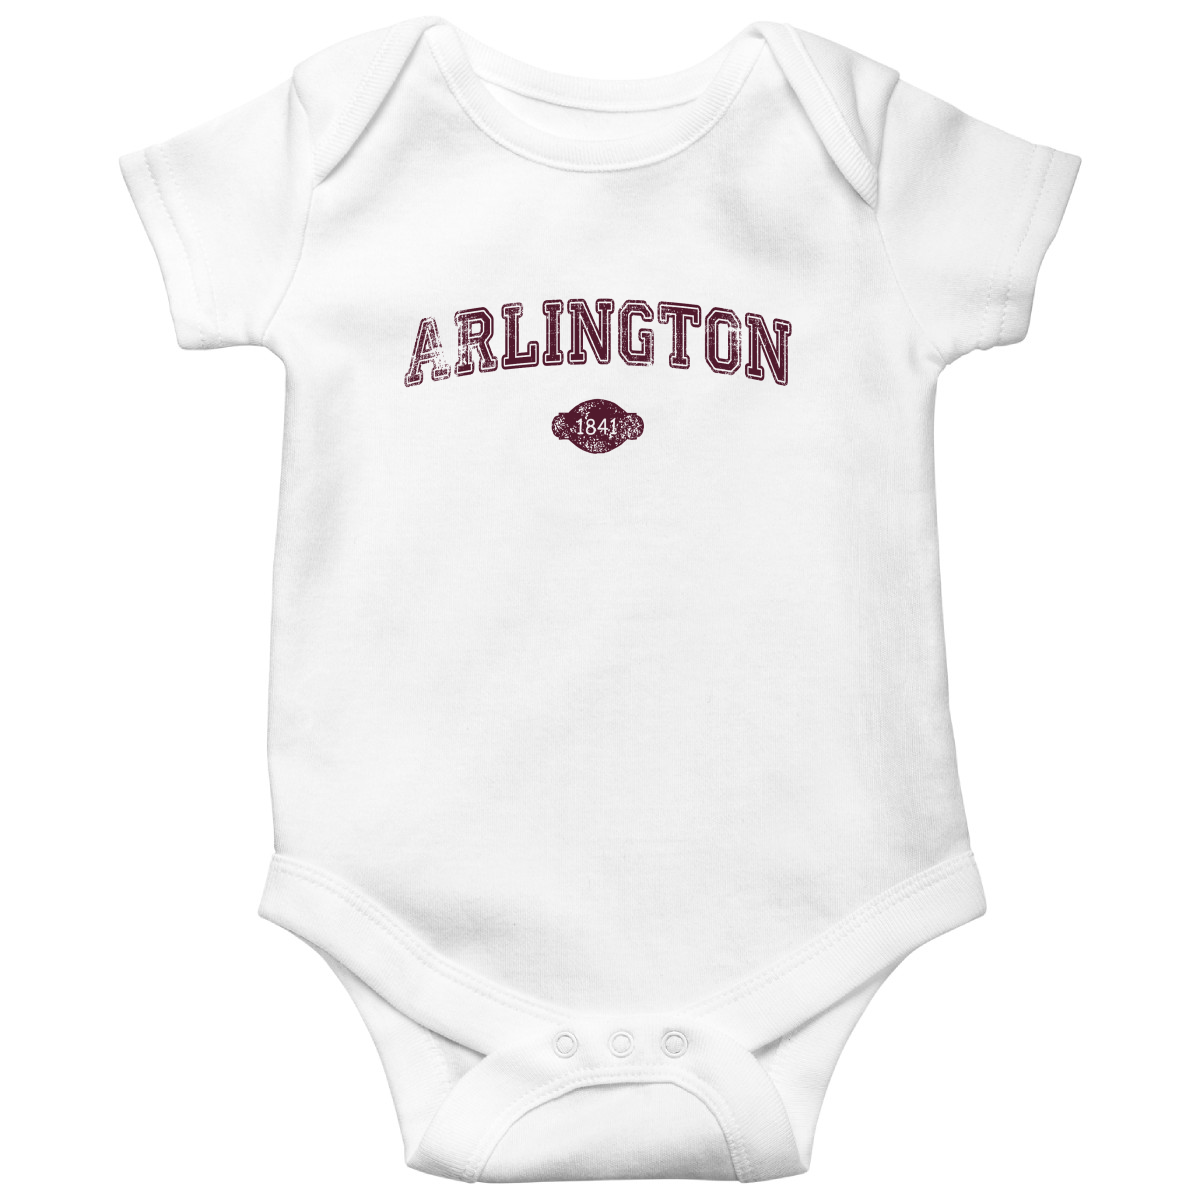 Arlington 1841 Represent Baby Bodysuits | White